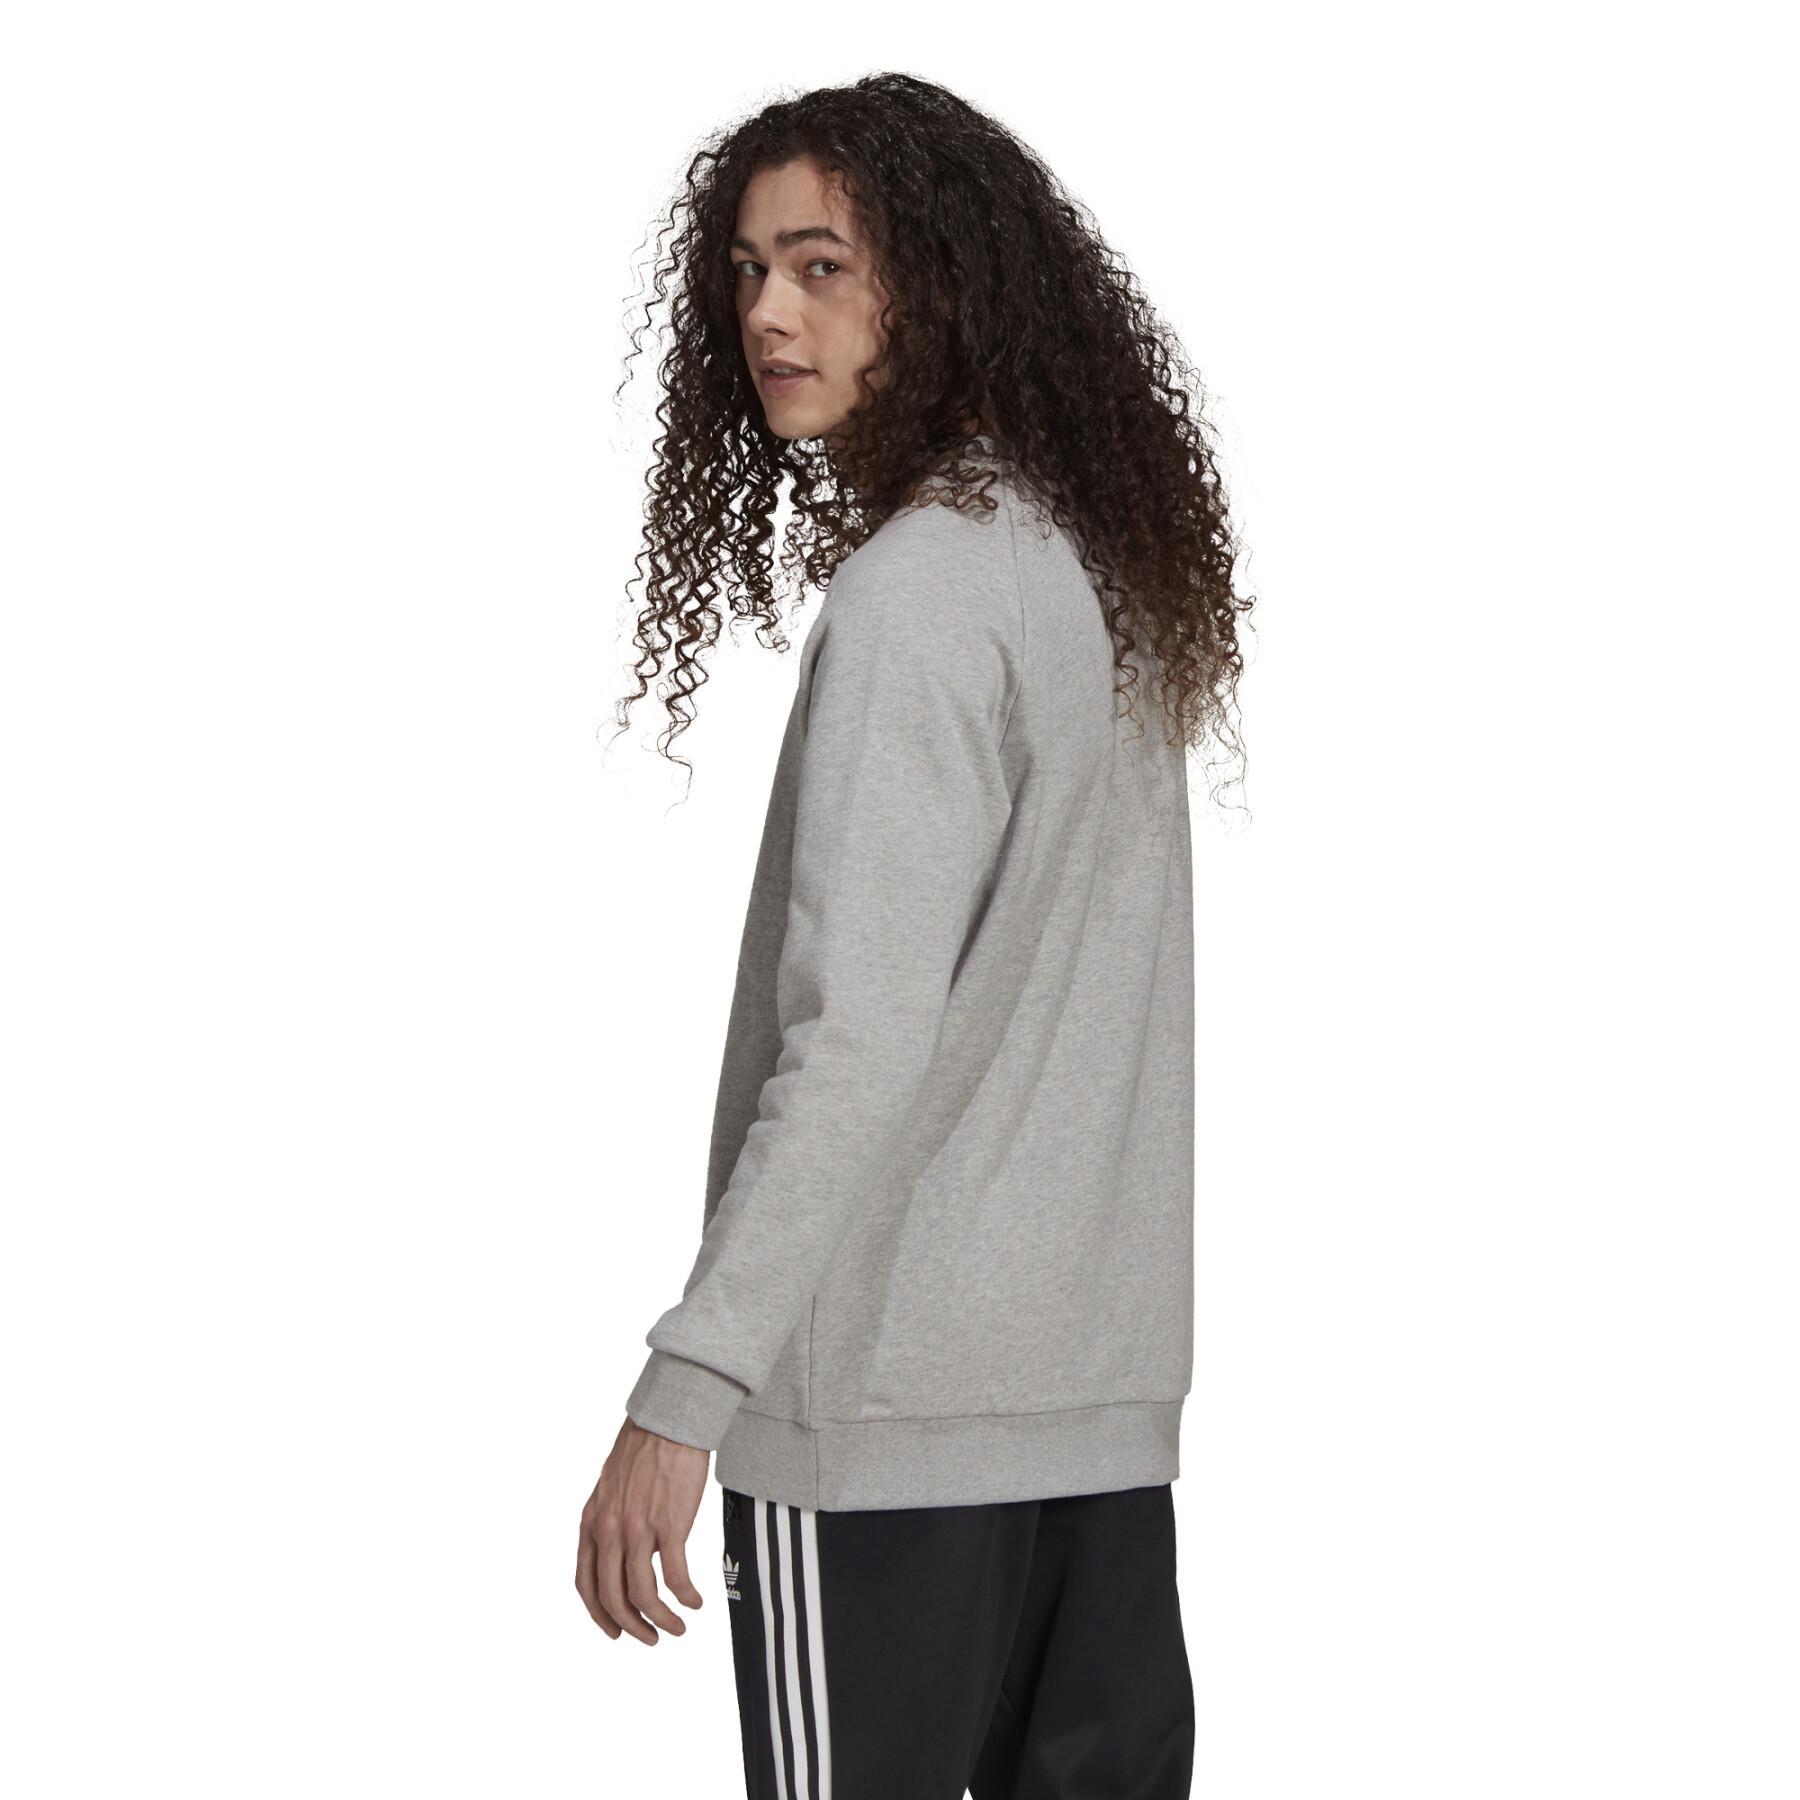 Sweatshirt col rond adidas Originals Adicolor Trefoil